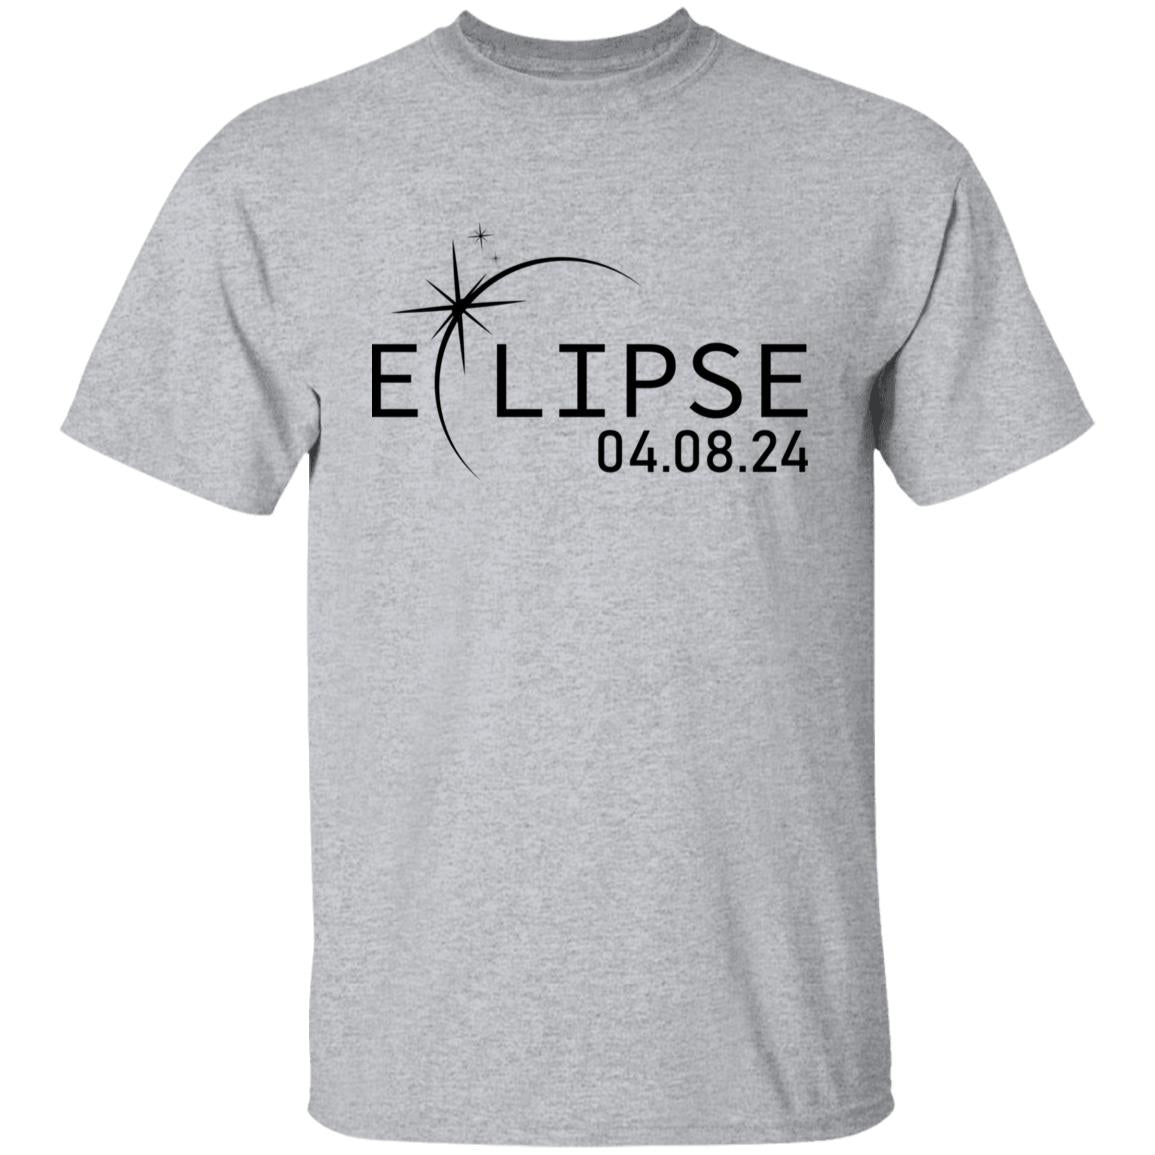 Eclipse Youth 5.3 oz 100% Cotton T-Shirt